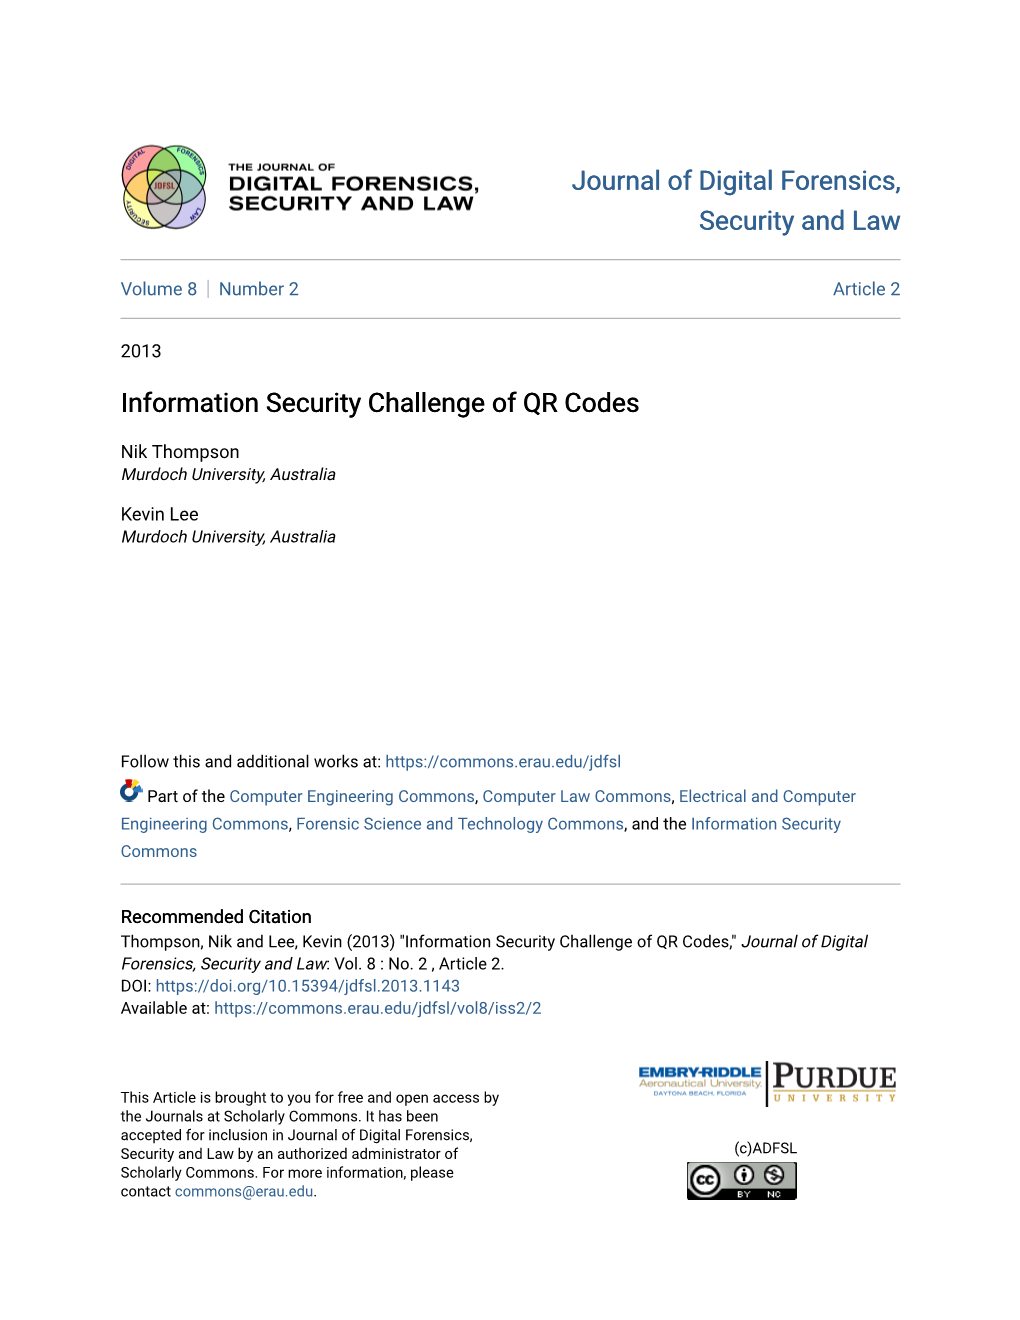 Information Security Challenge of QR Codes